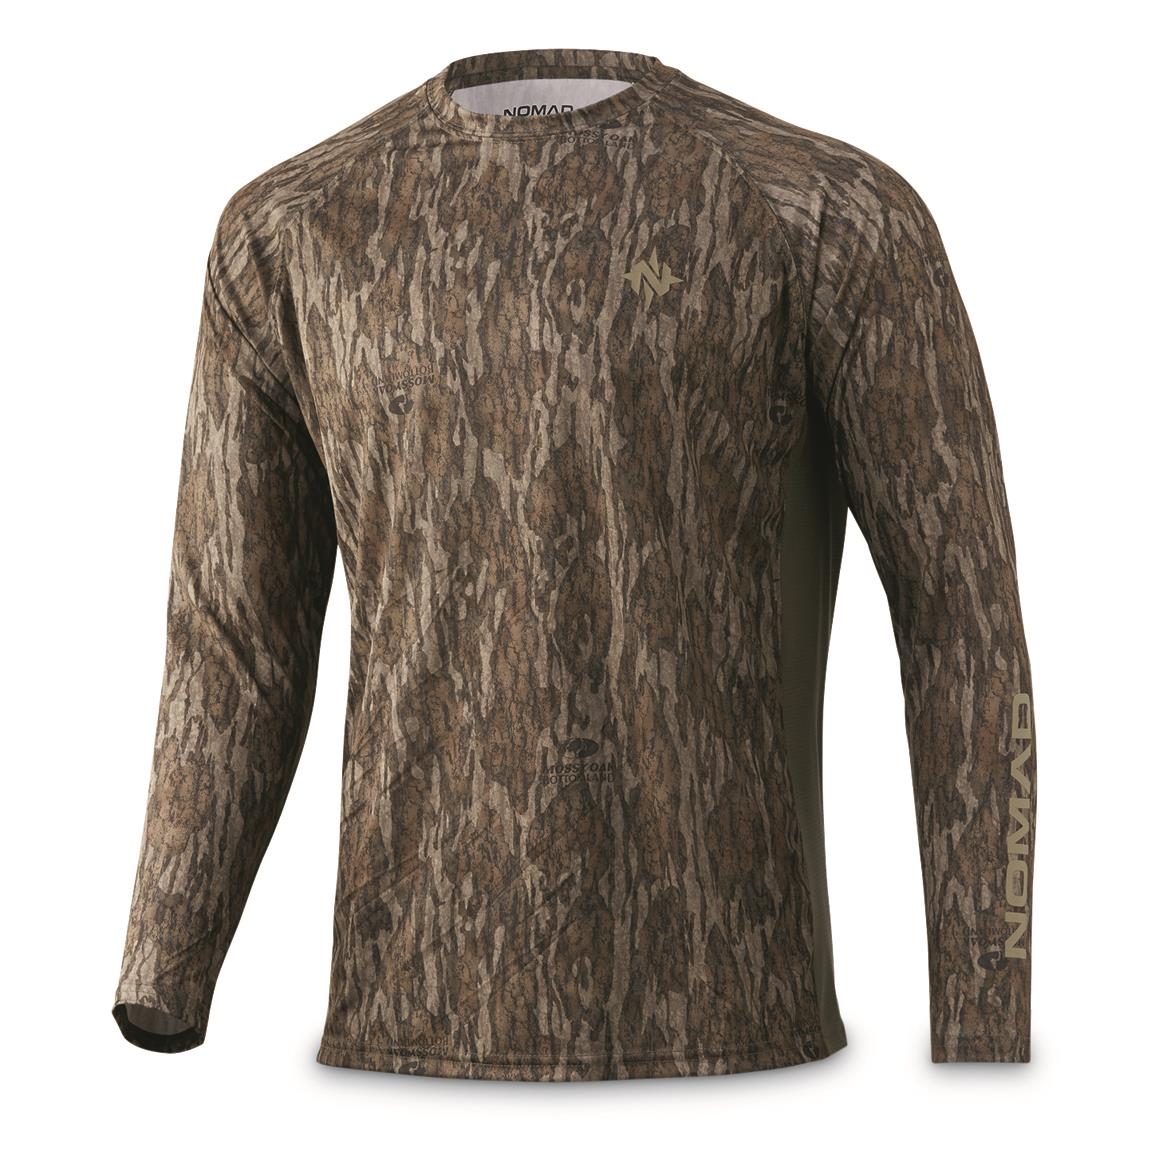 Blocker Outdoors Finisher Long Sleeve Performance Turkey Hunting Shirt -  731149, Camo & Shooting Shirts at Sportsman's Guide